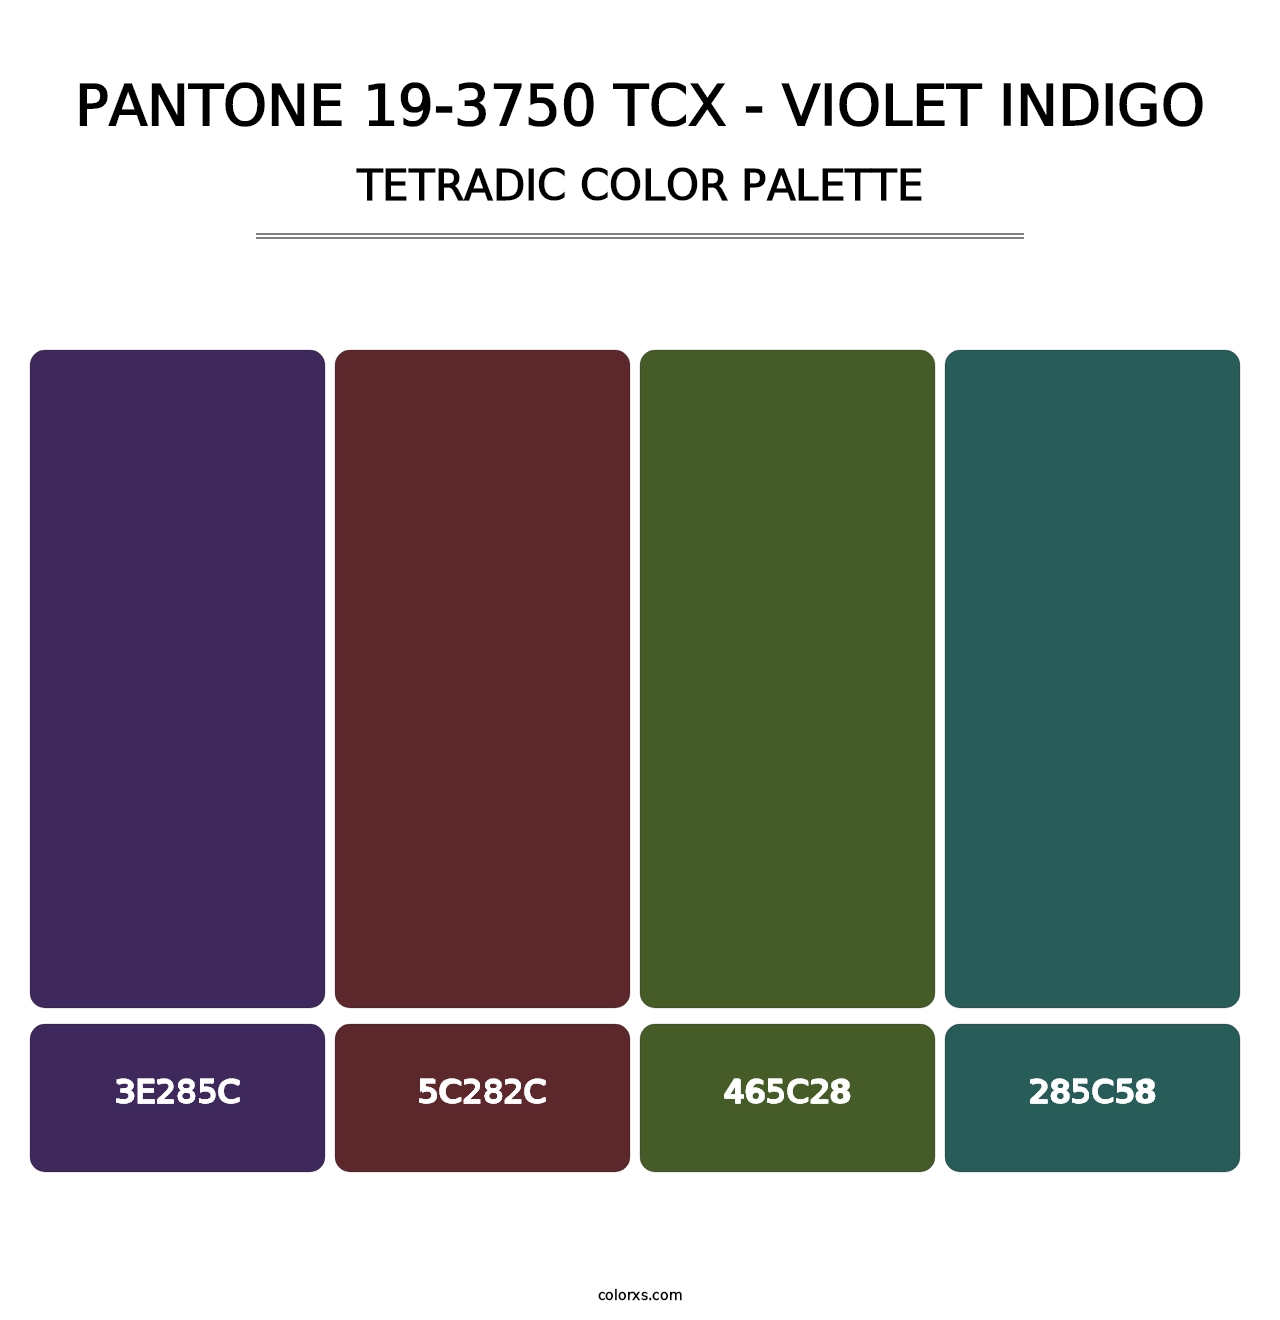 PANTONE 19-3750 TCX - Violet Indigo - Tetradic Color Palette